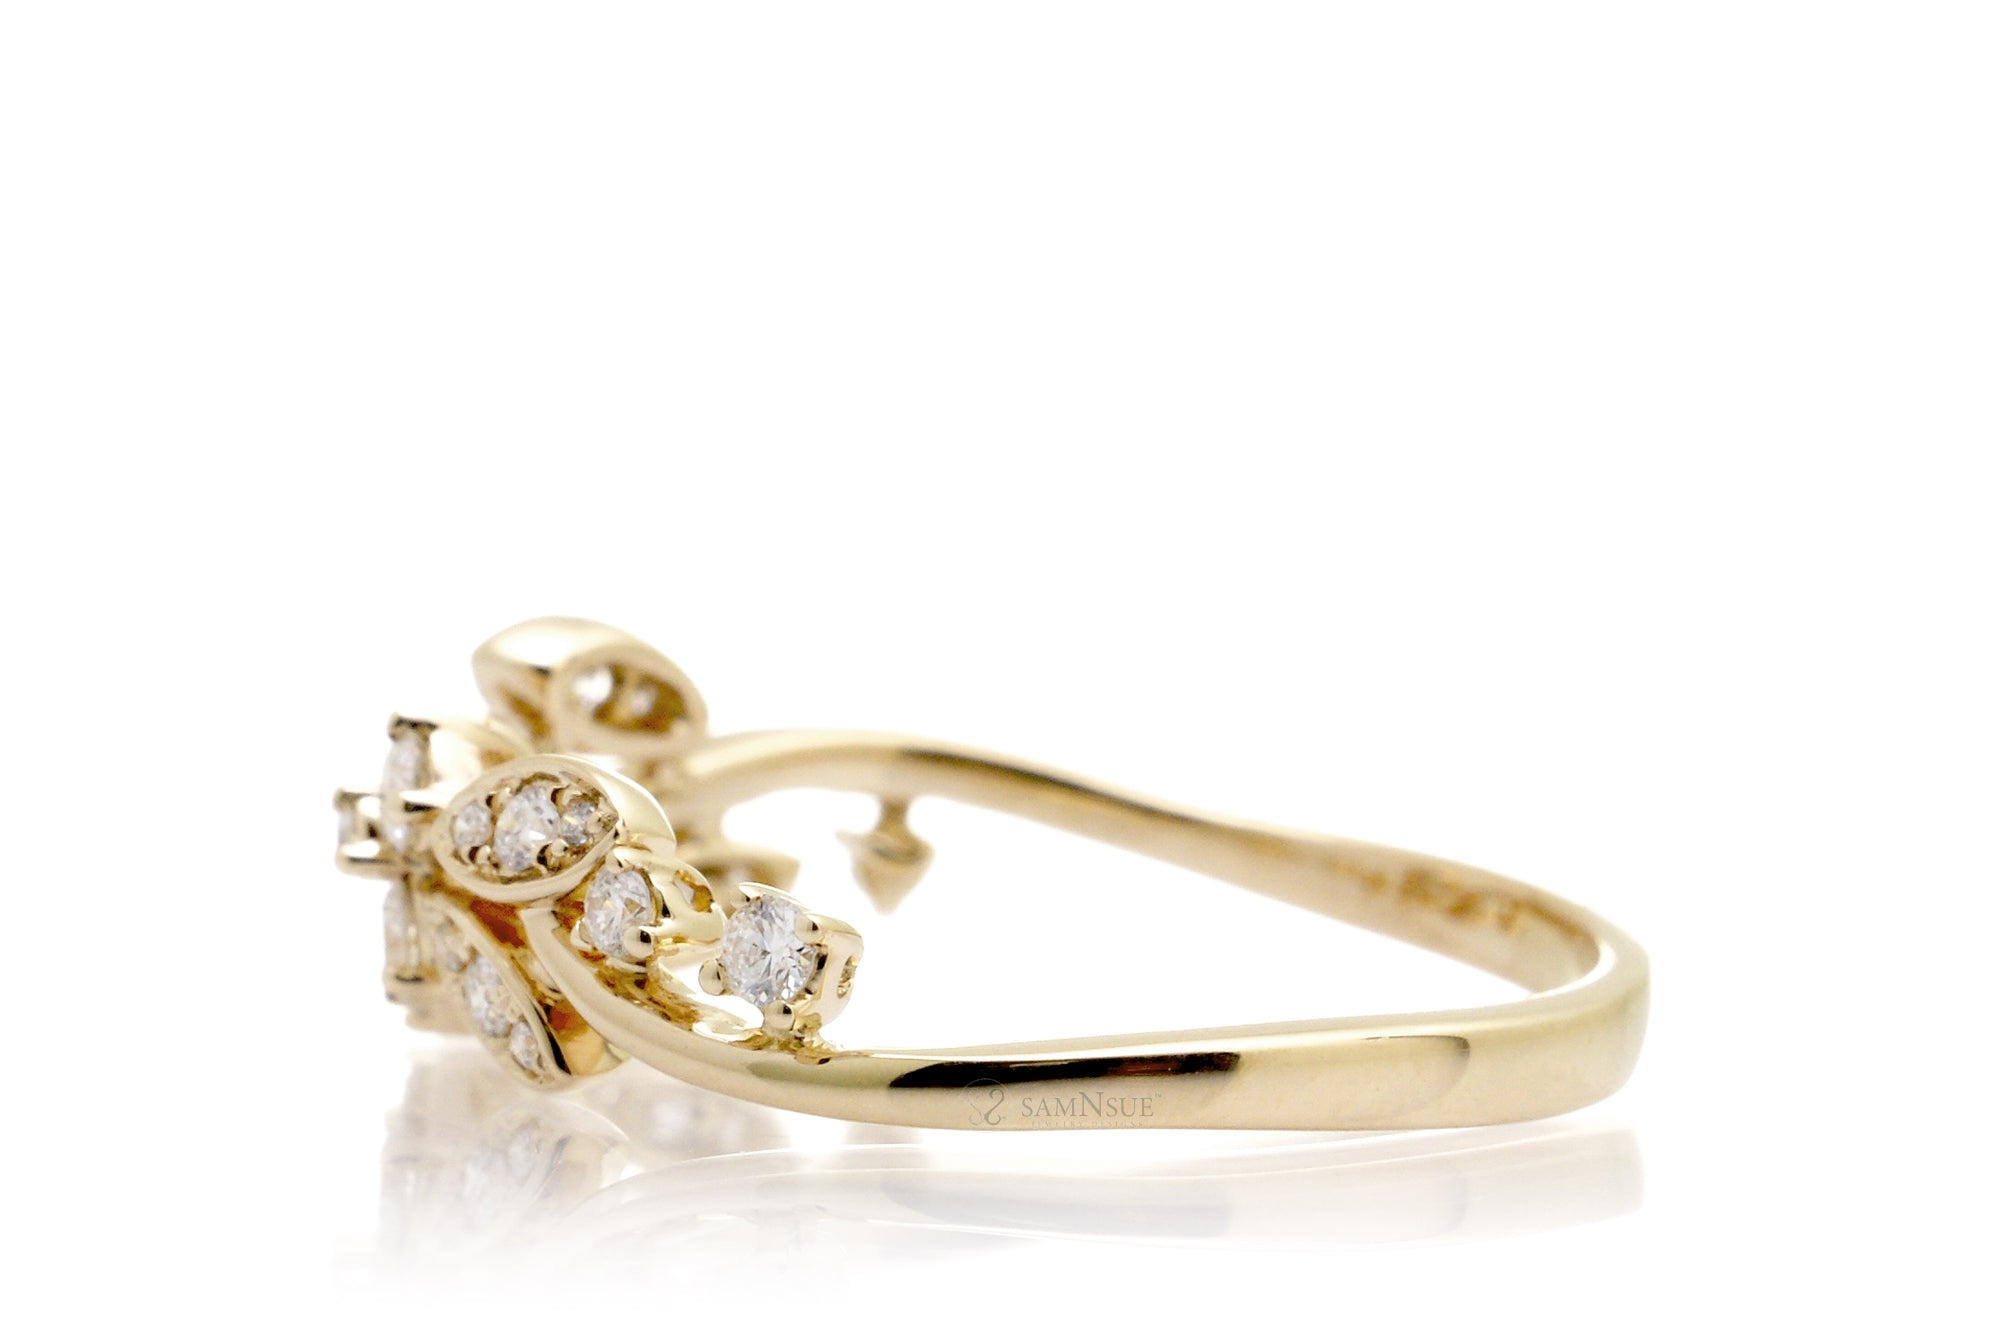 The Evy Diamond Ring